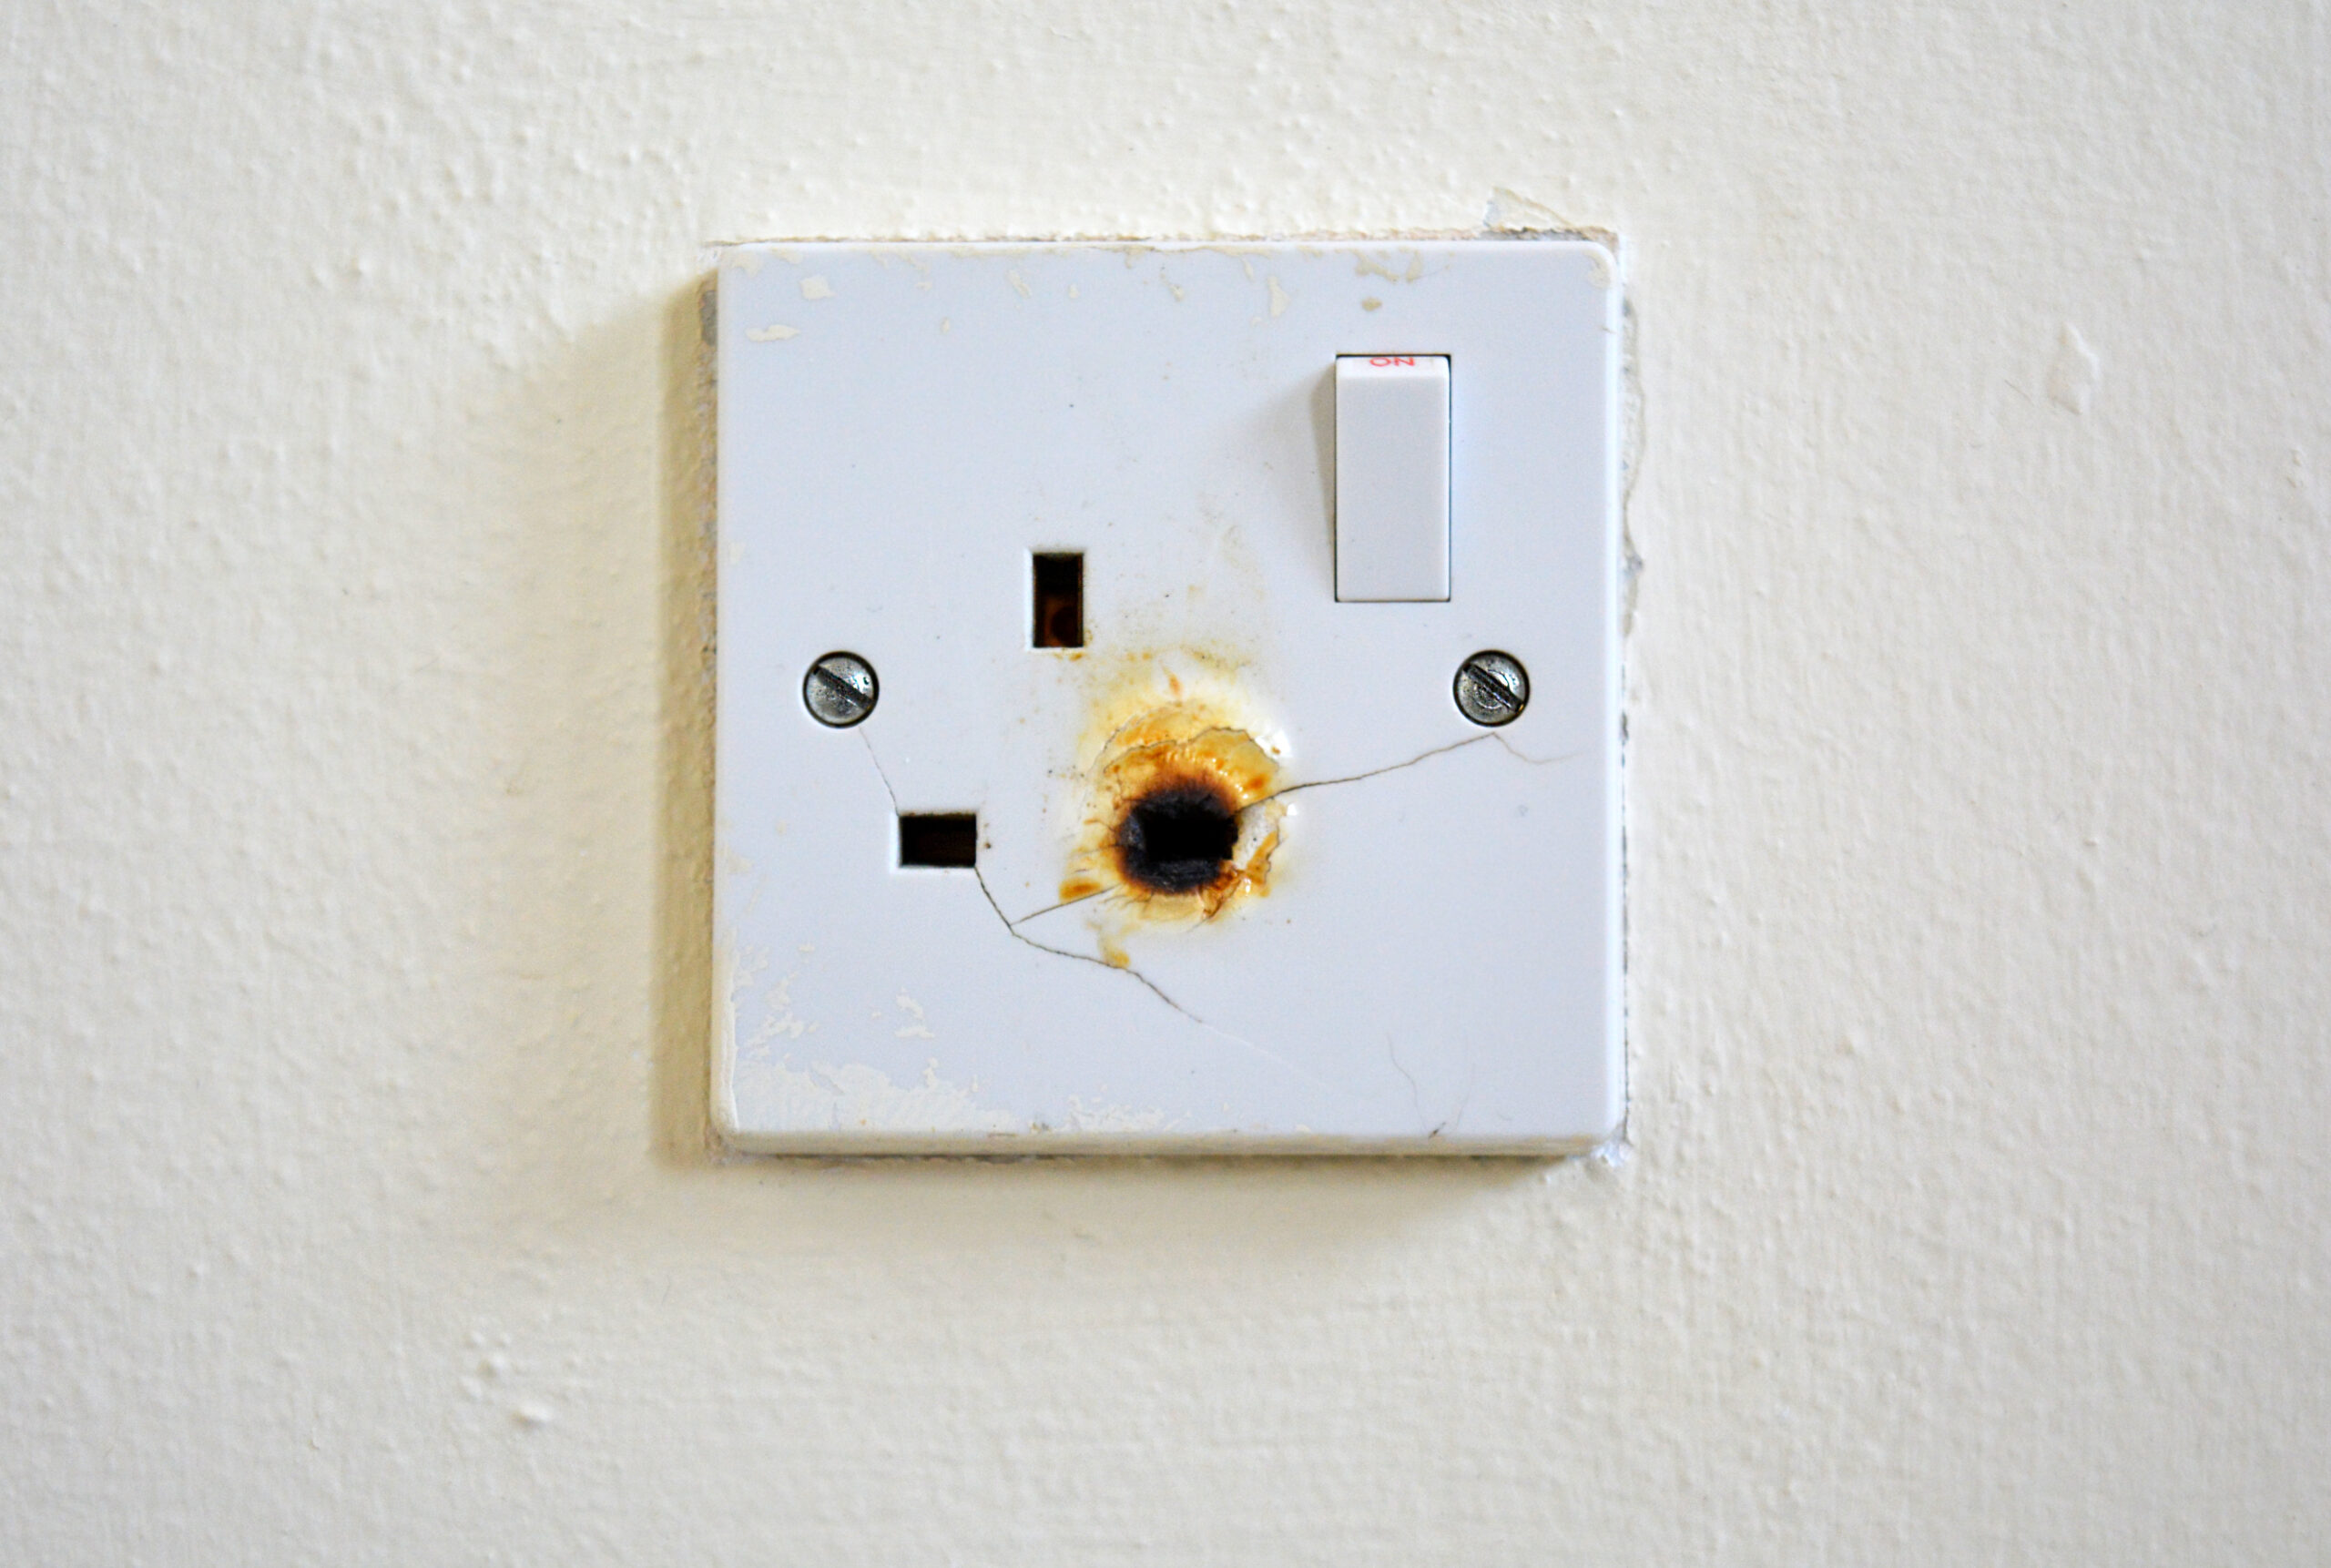 Damaged electric socket